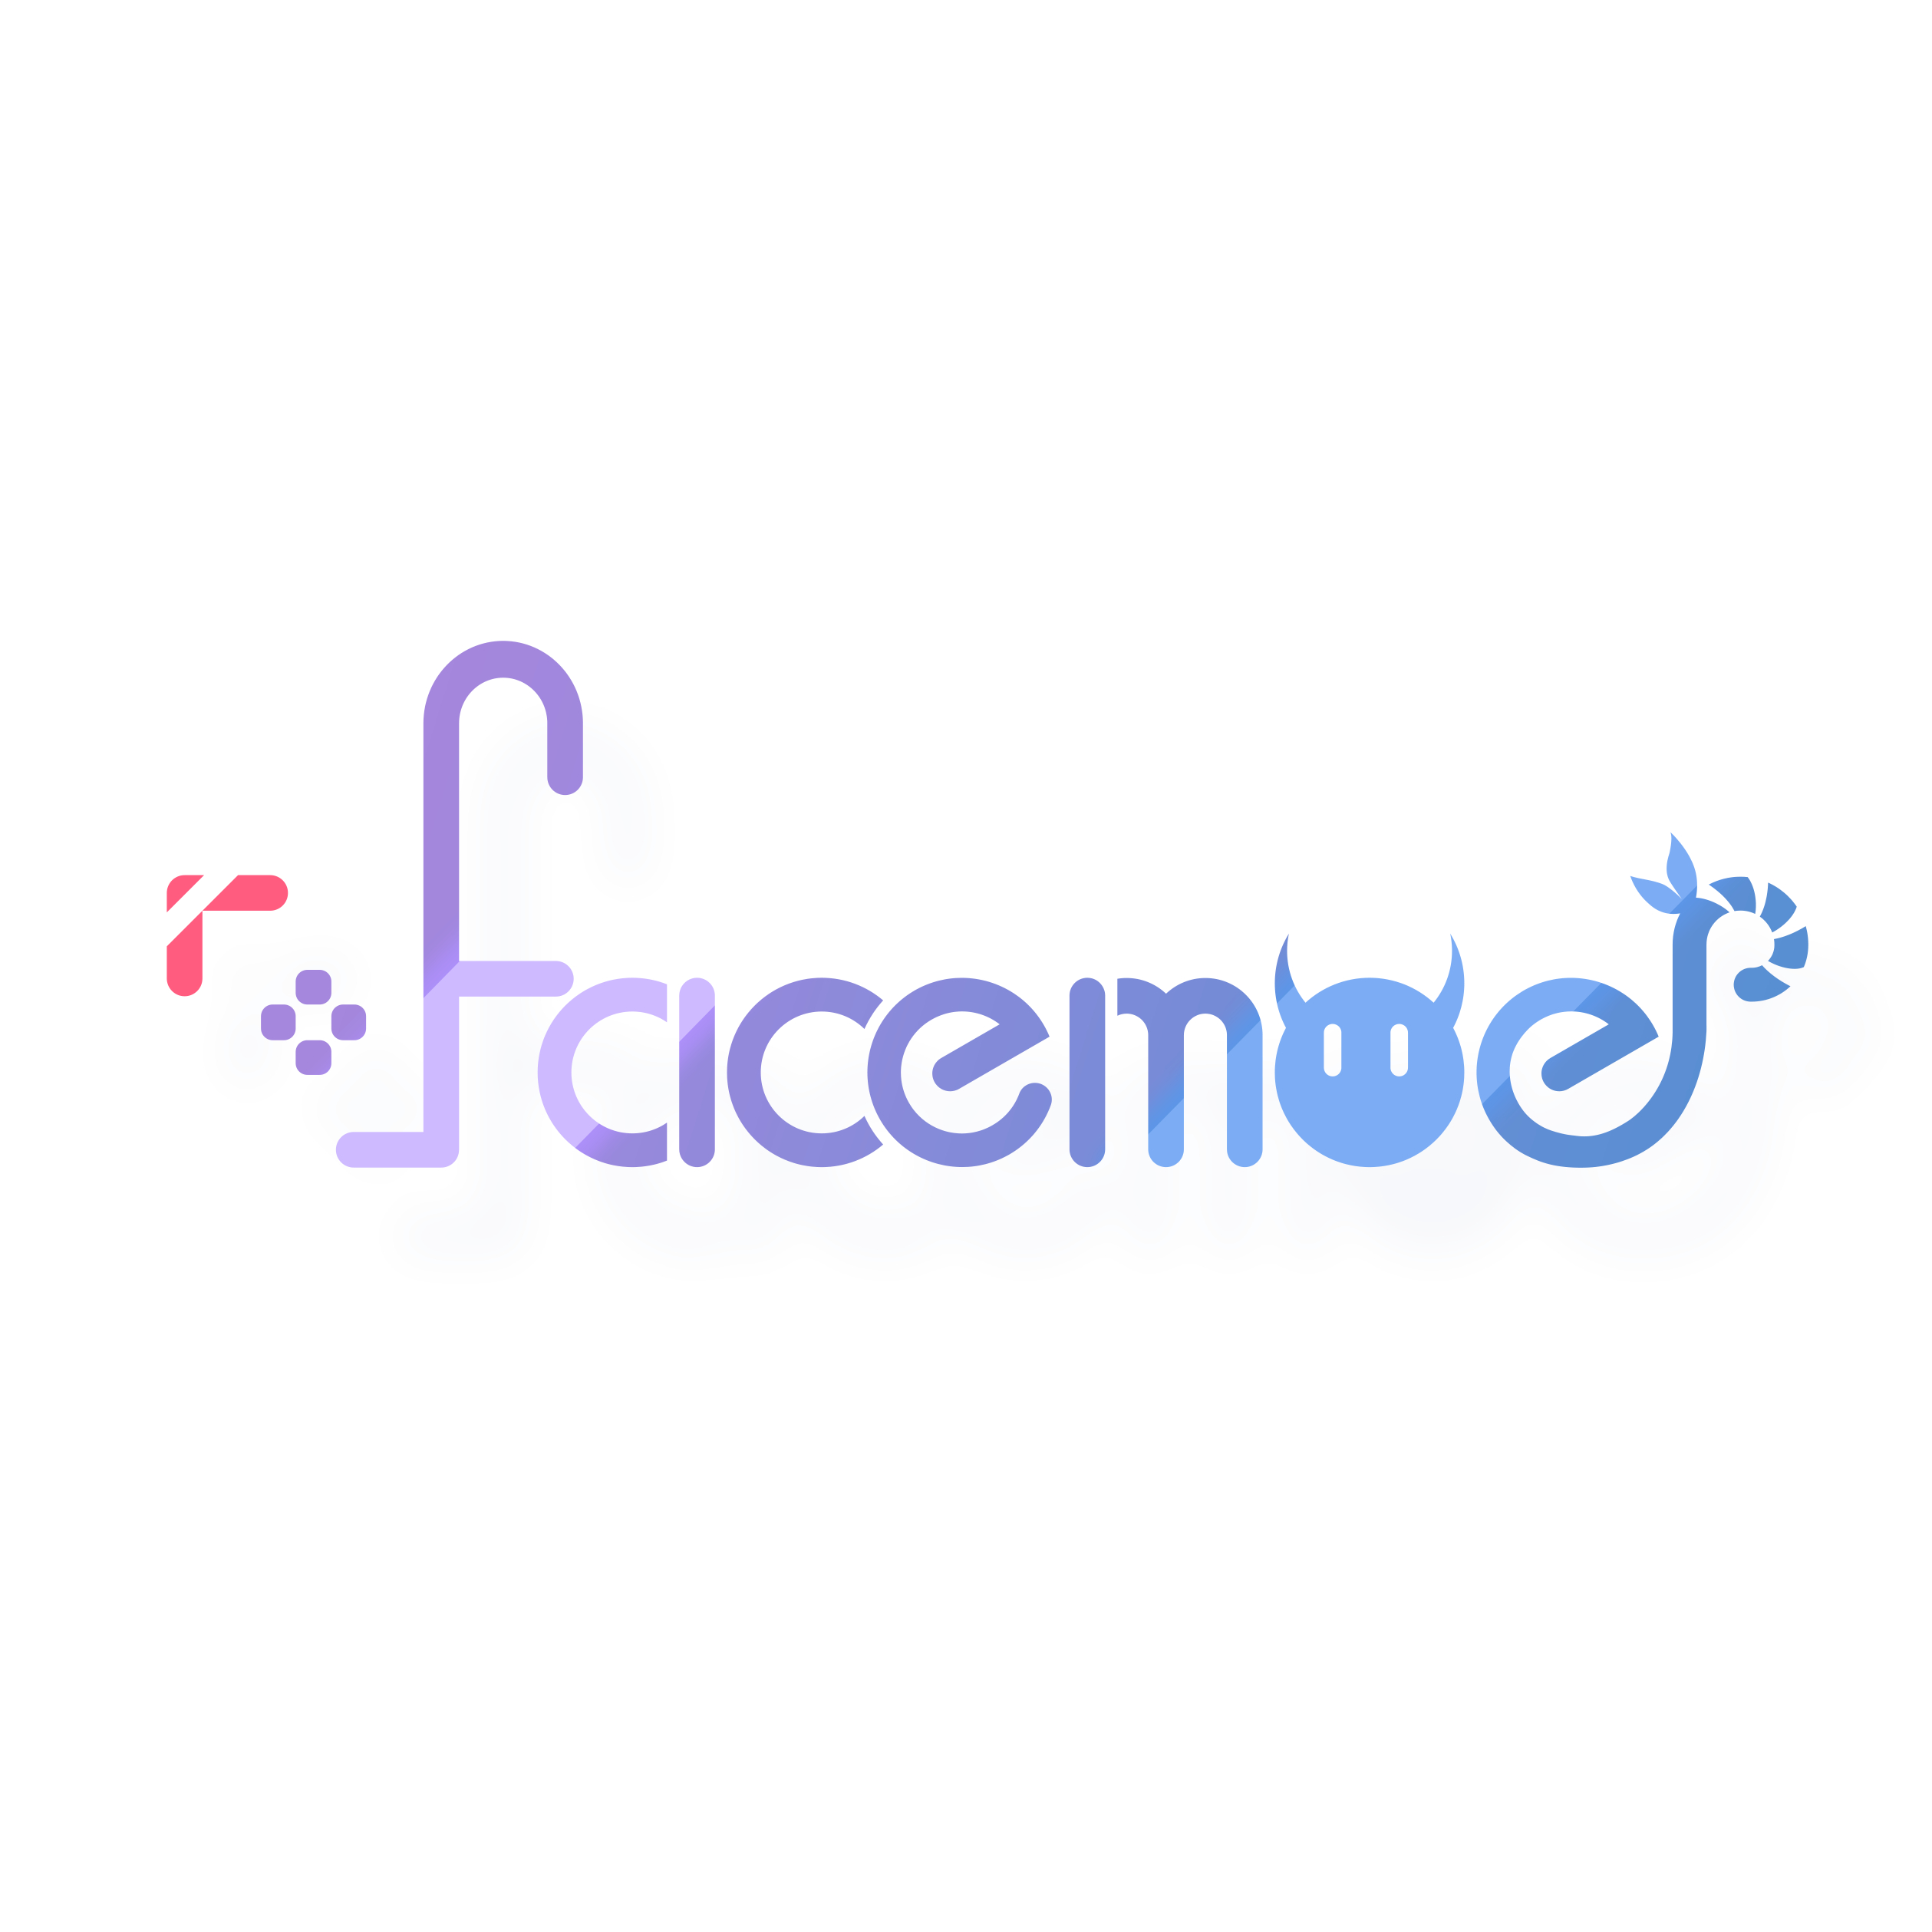 Facemoe logo.jpg